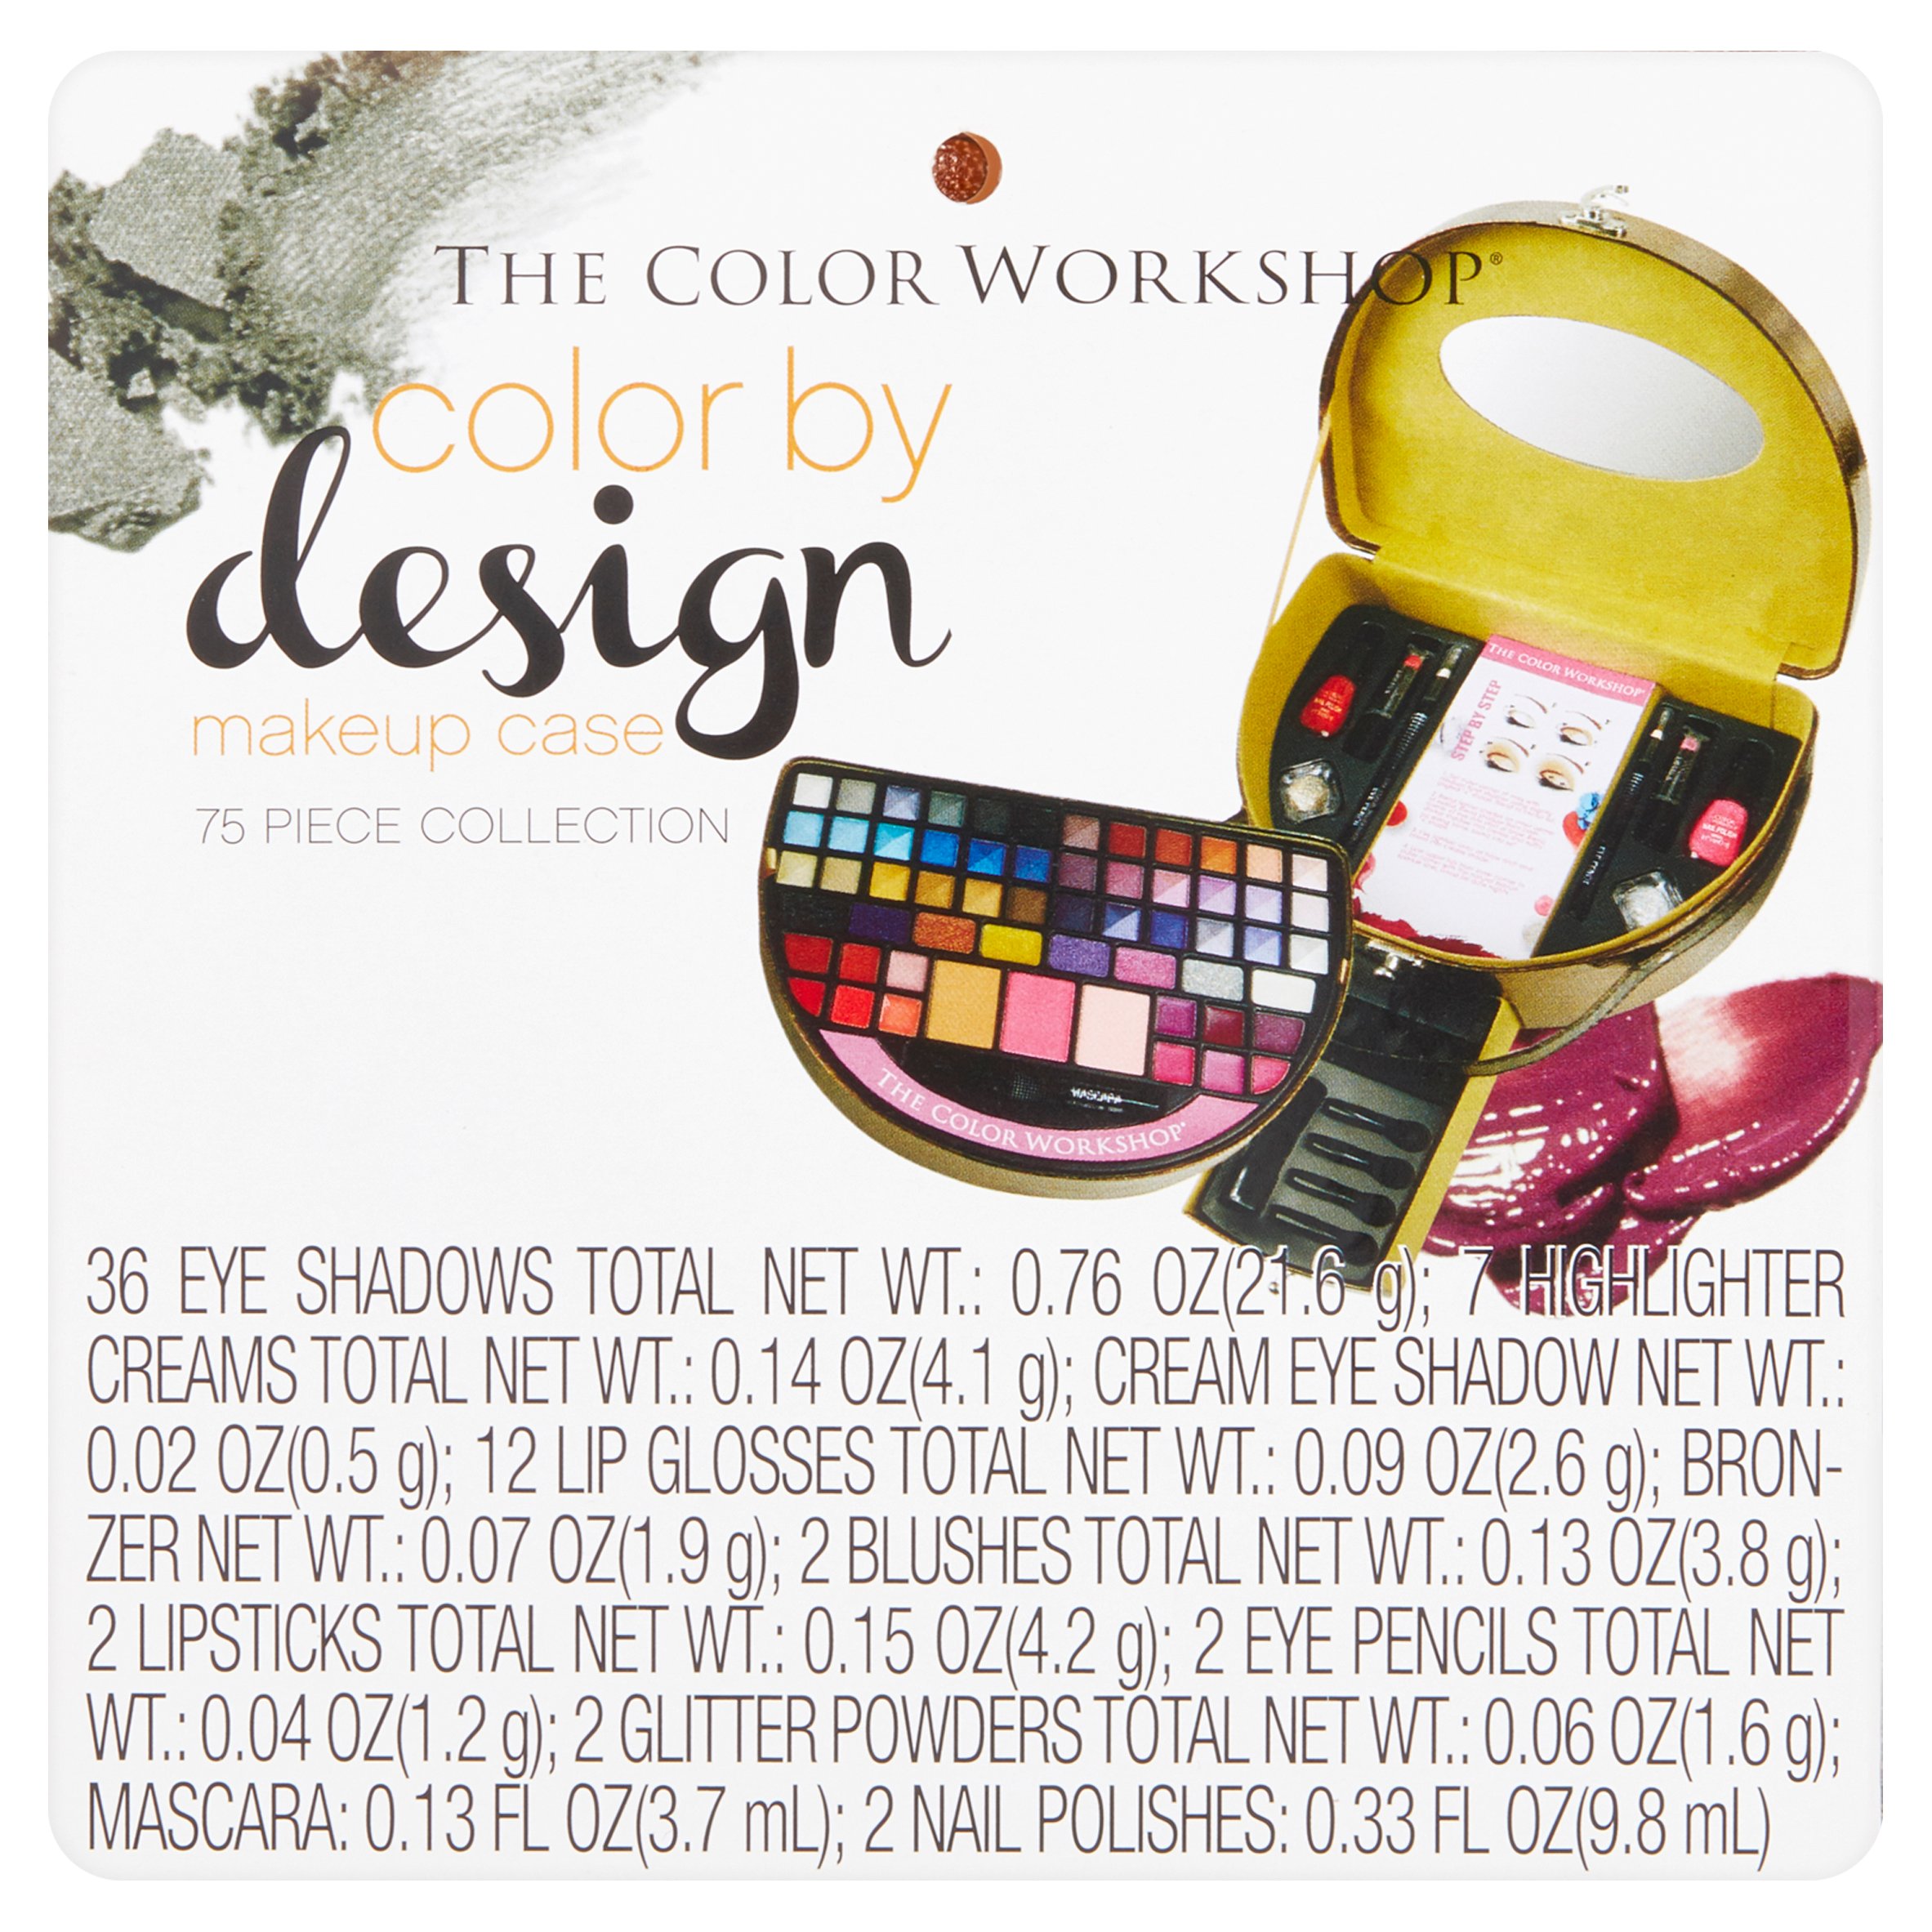 The Color Workshop Color by Design 75 Piece Collection Makeup Case - image 4 of 4